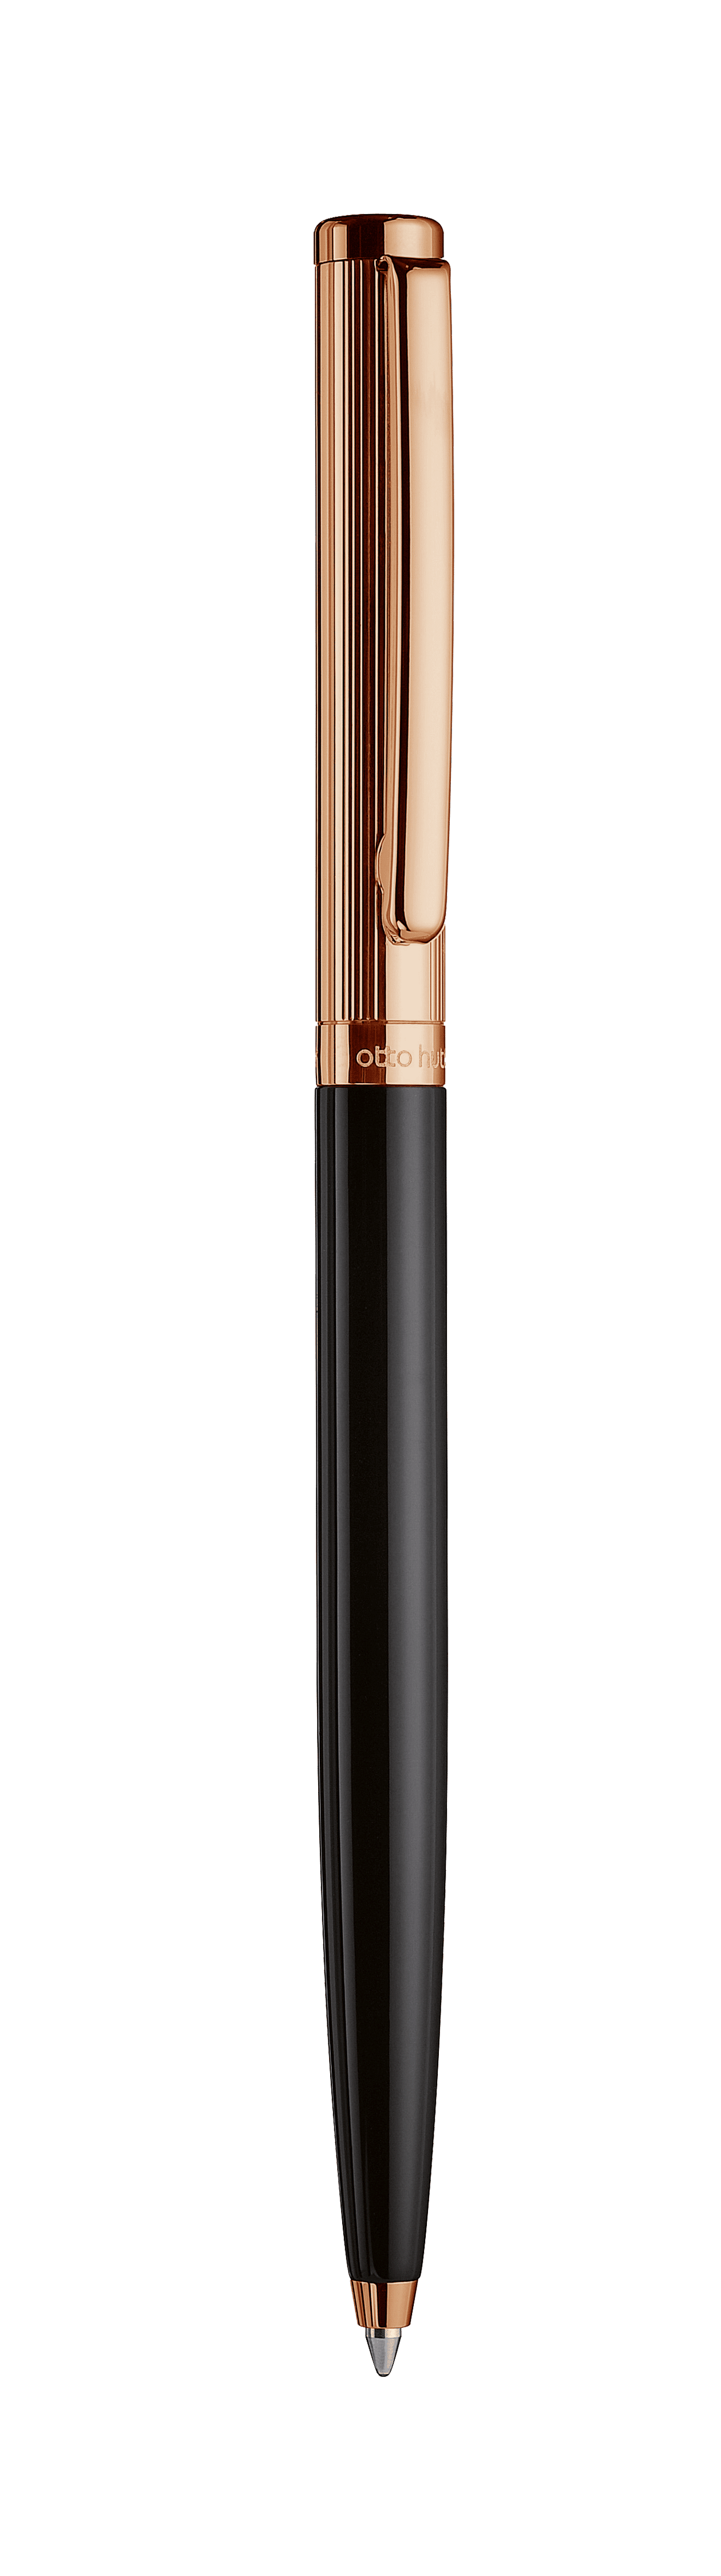 Kugelschreiber schwarz lackiert/rosè vergoldet - Design 01